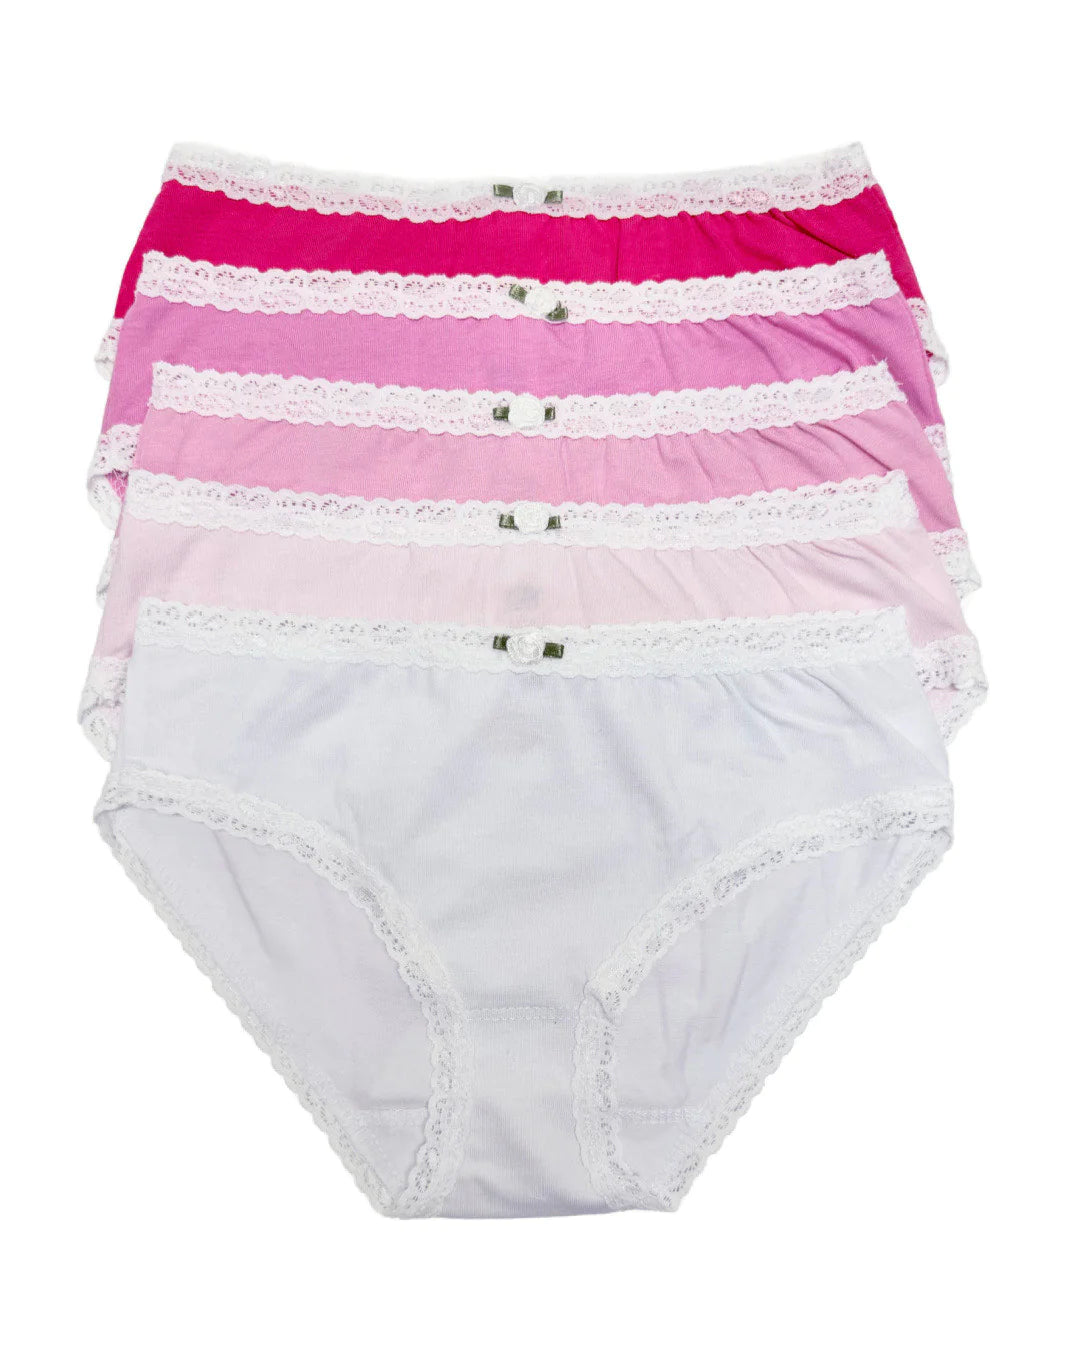 Shop SKINY Panties set of 2 on Rinascente